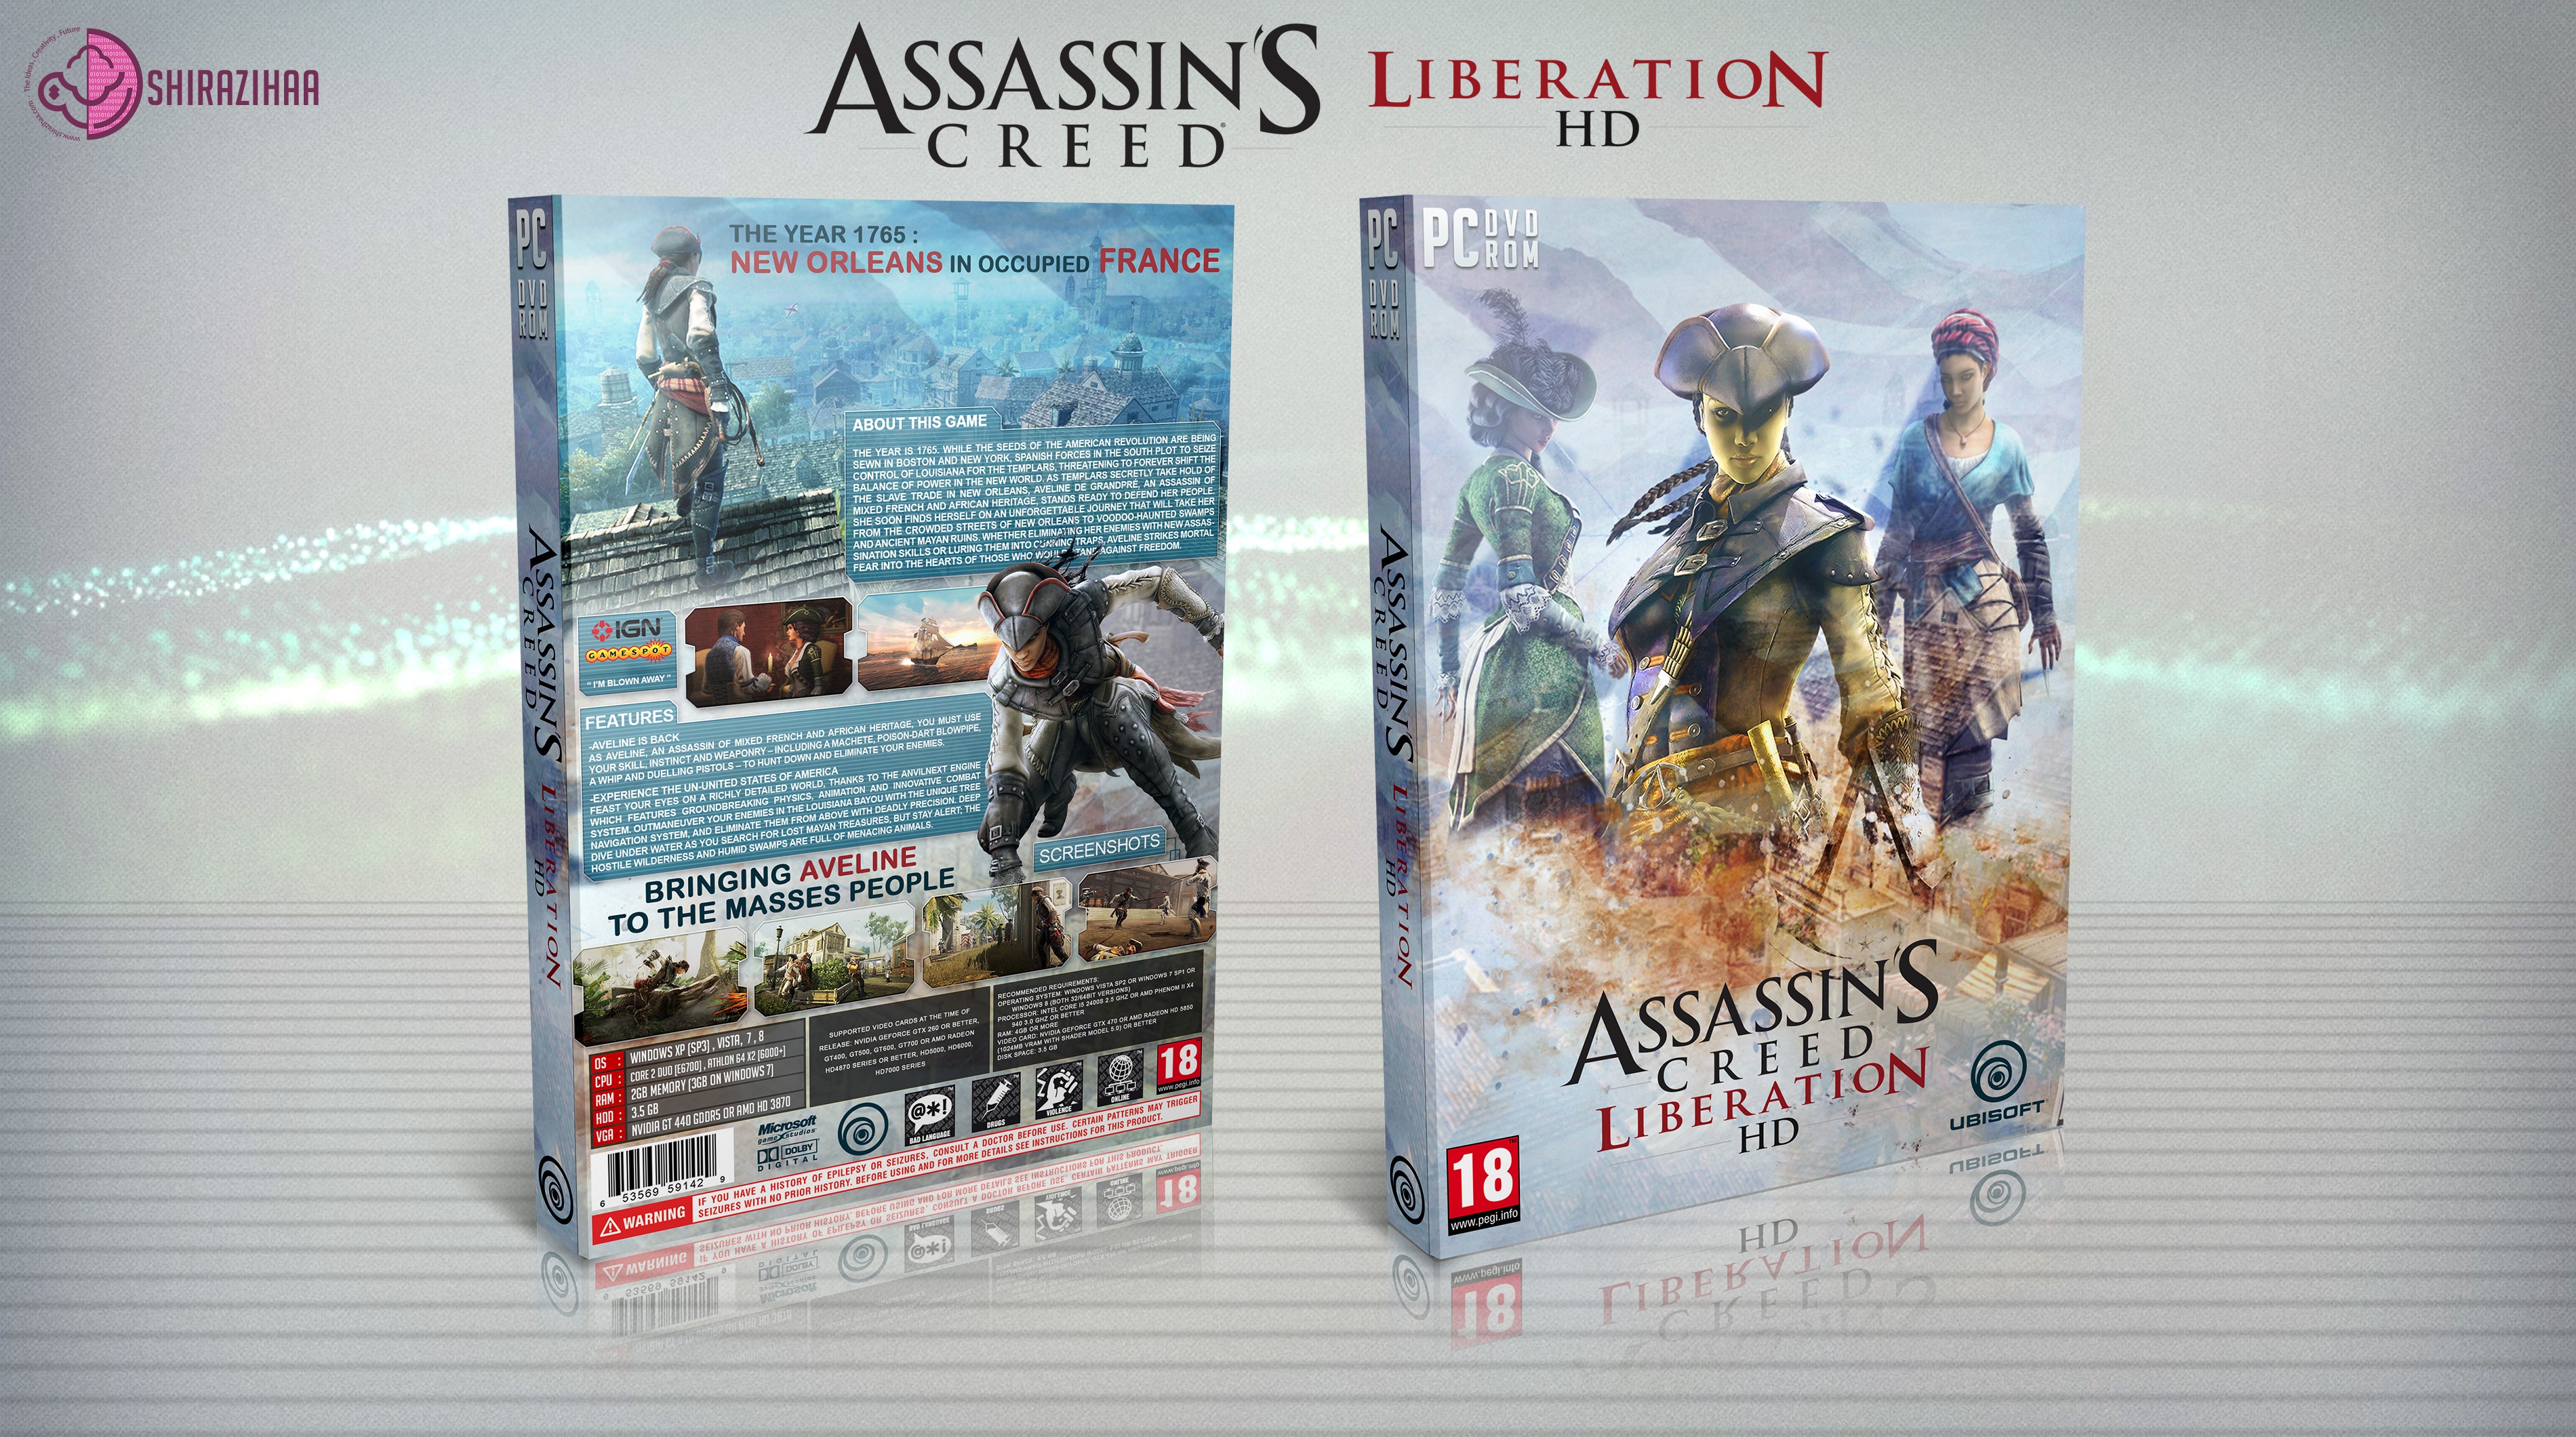 Assassins Creed: Liberation HD box cover